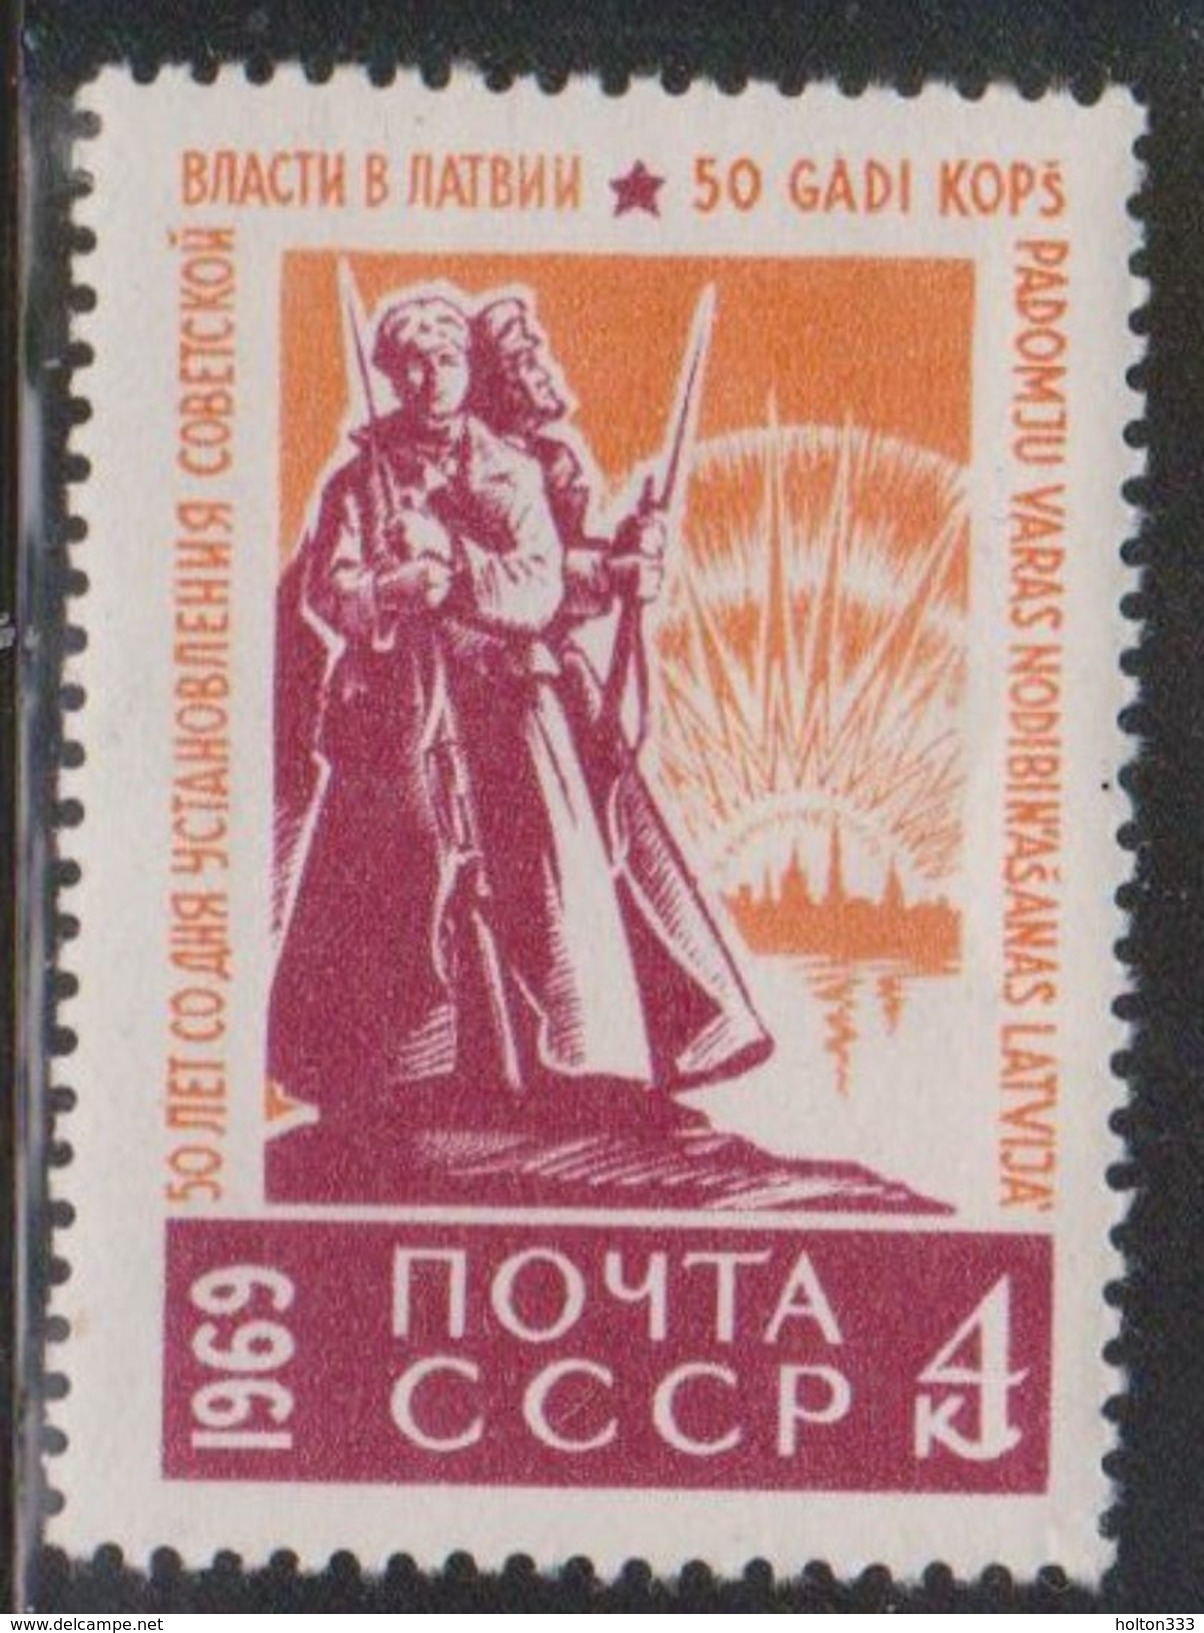 RUSSIA Scott # 3567 Mint Hinged - Latvian Soviet Republic - Express Mail